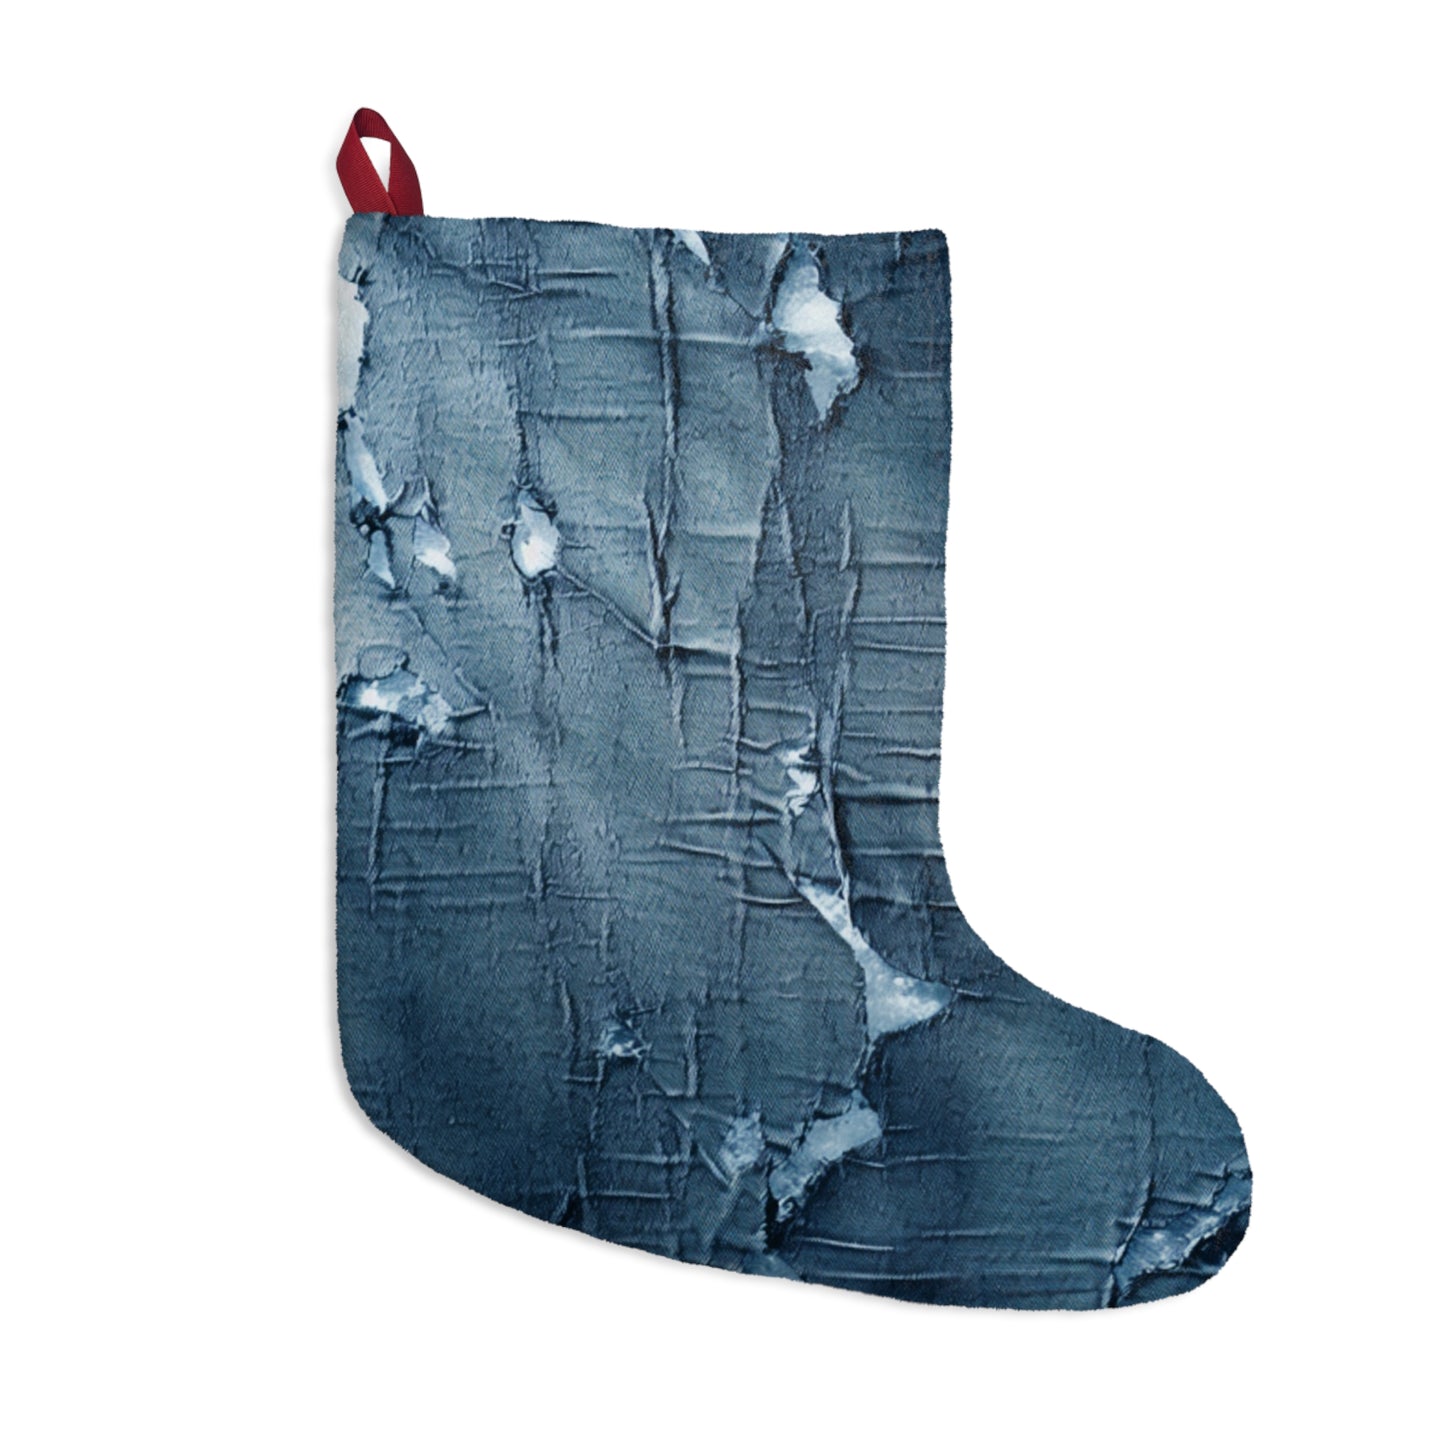 Distressed Blue Denim-Look: Edgy, Torn Fabric Design - Christmas Stockings